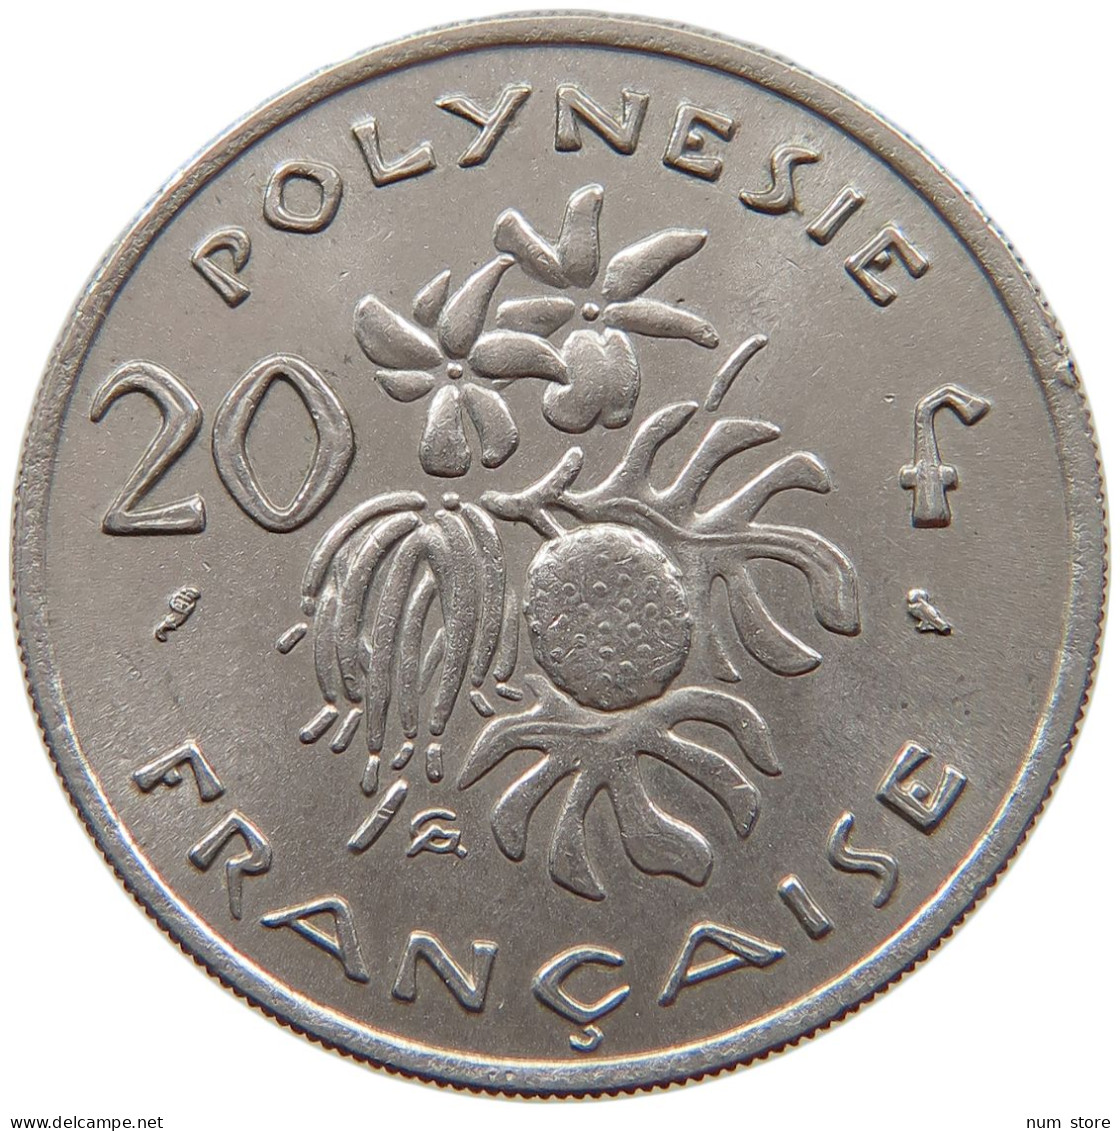 POLYNESIA 20 FRANCS 1967  #c064 0253 - Polinesia Francesa